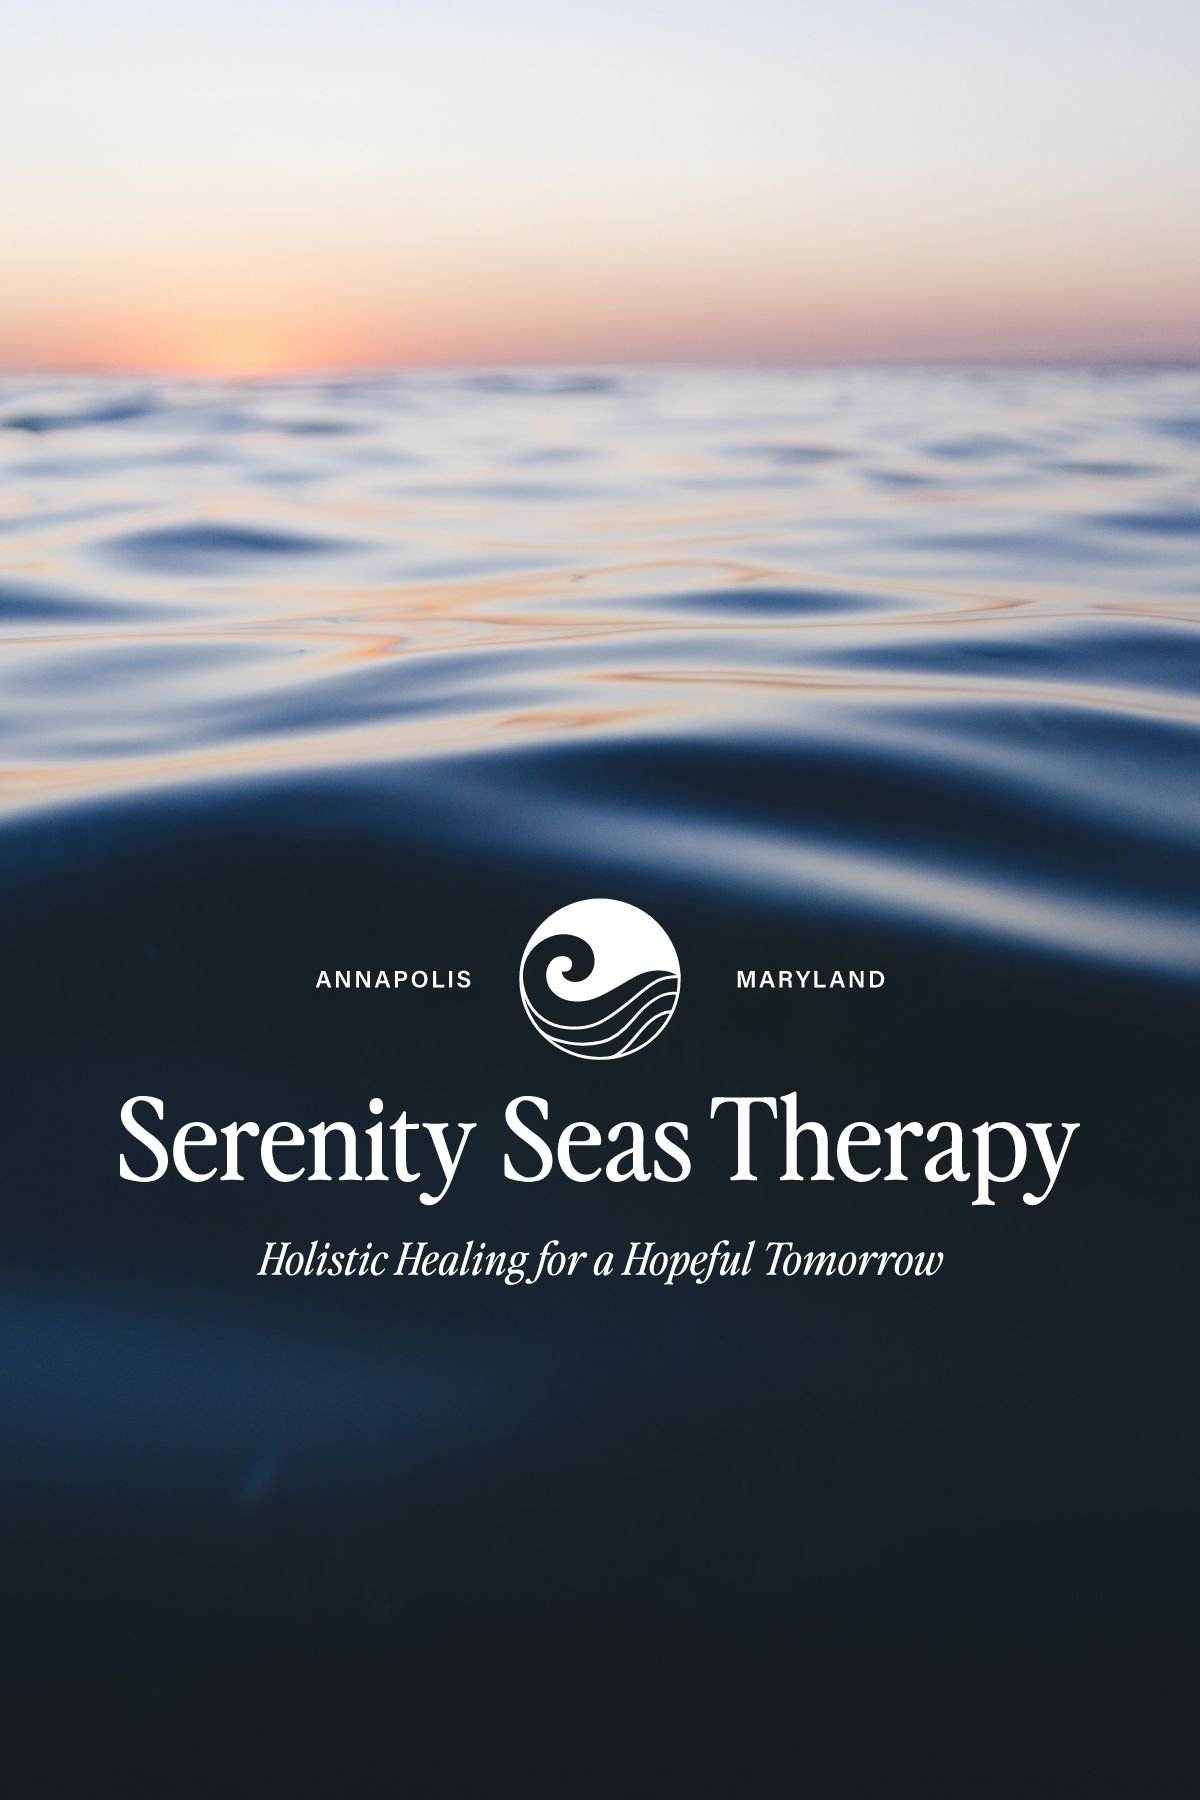 brand-identity-design-serenity-seas-therapy-primary-logo.jpg